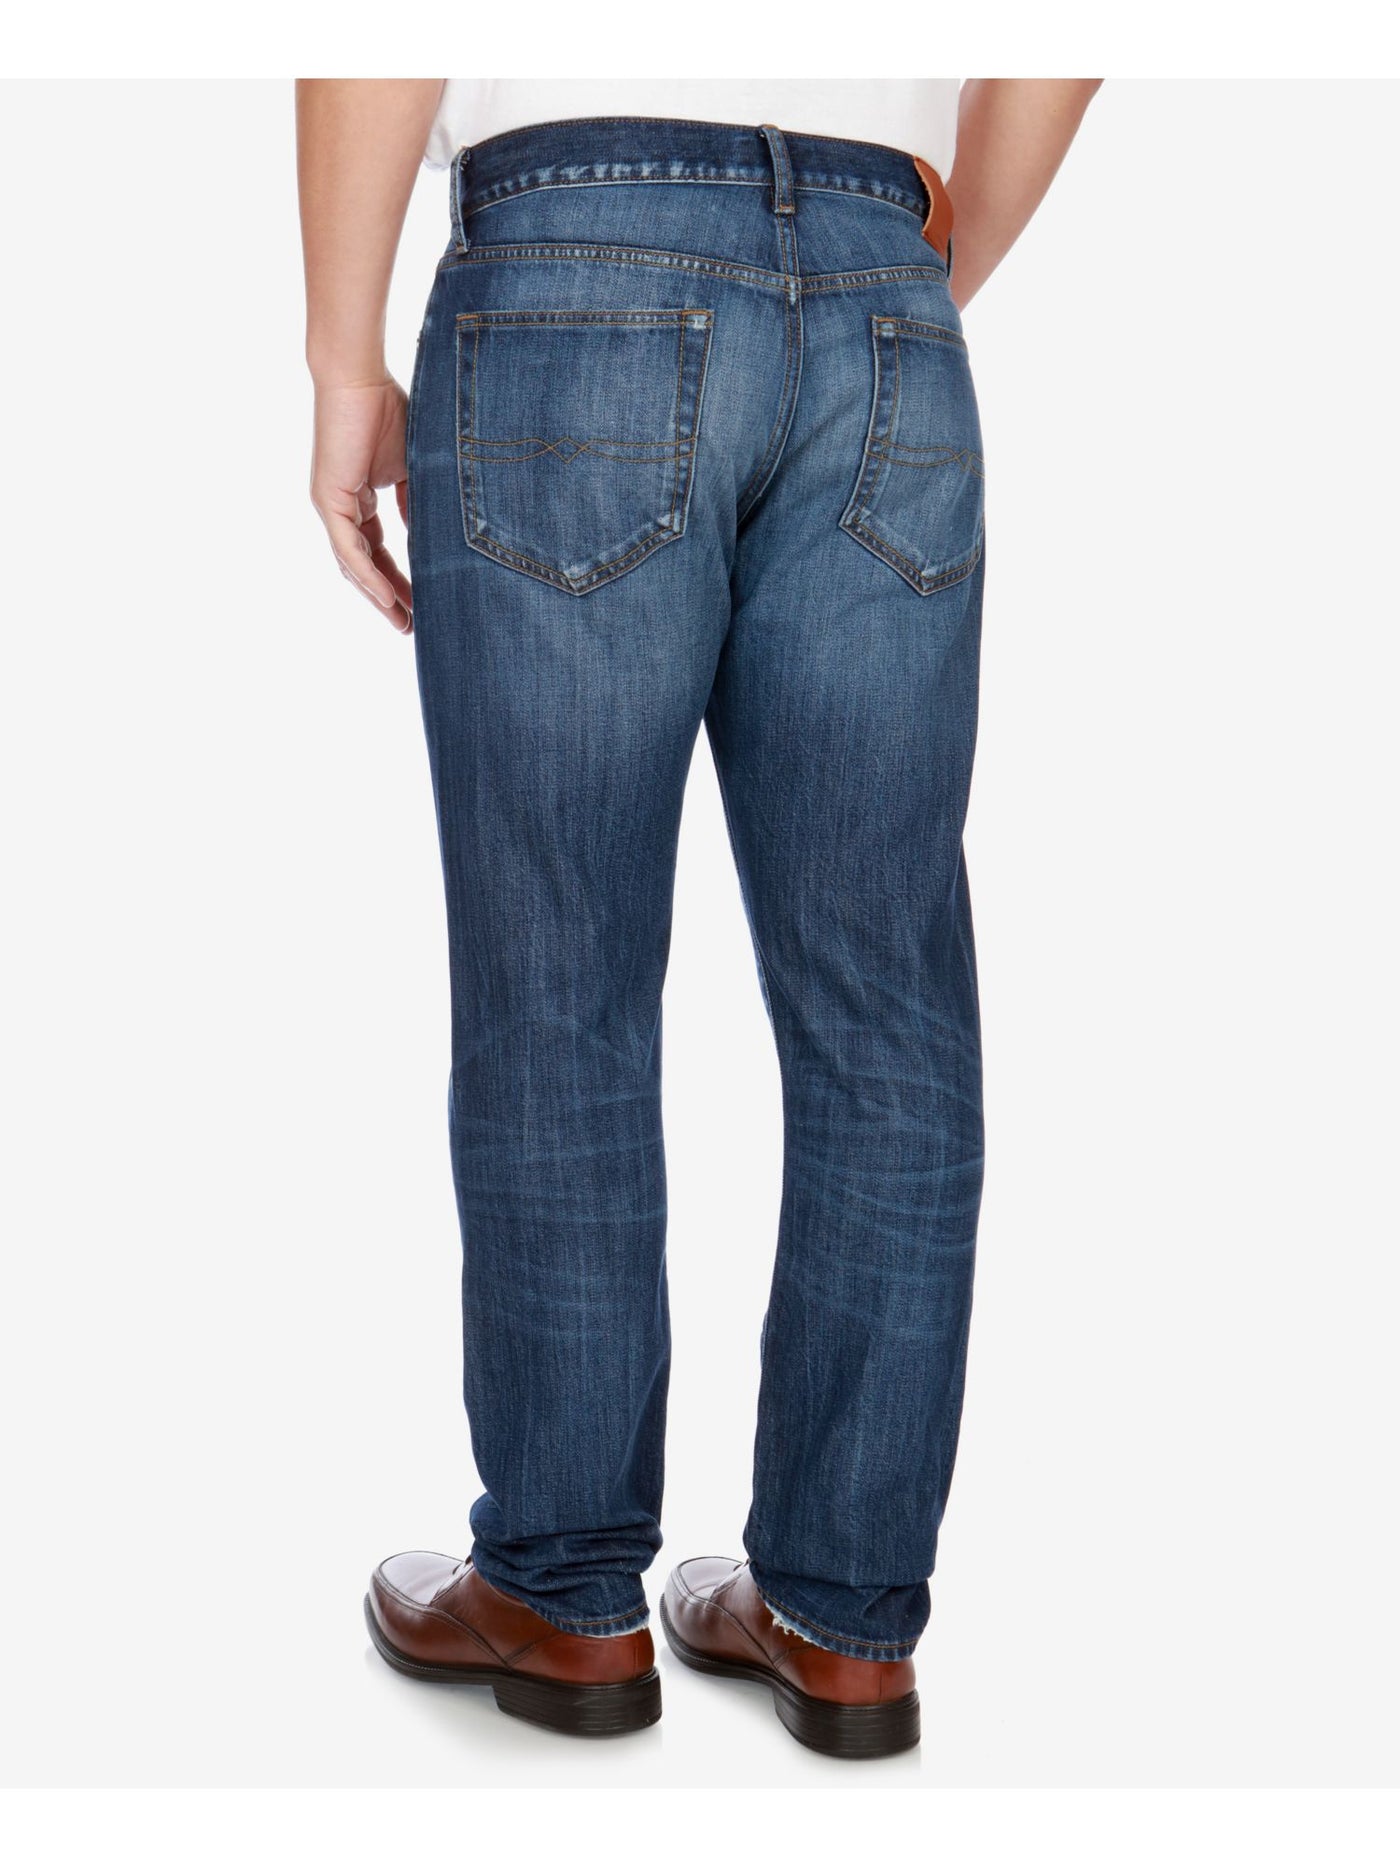 LUCKY BRAND Mens Blue Straight Leg, Denim Jeans W40/ L32